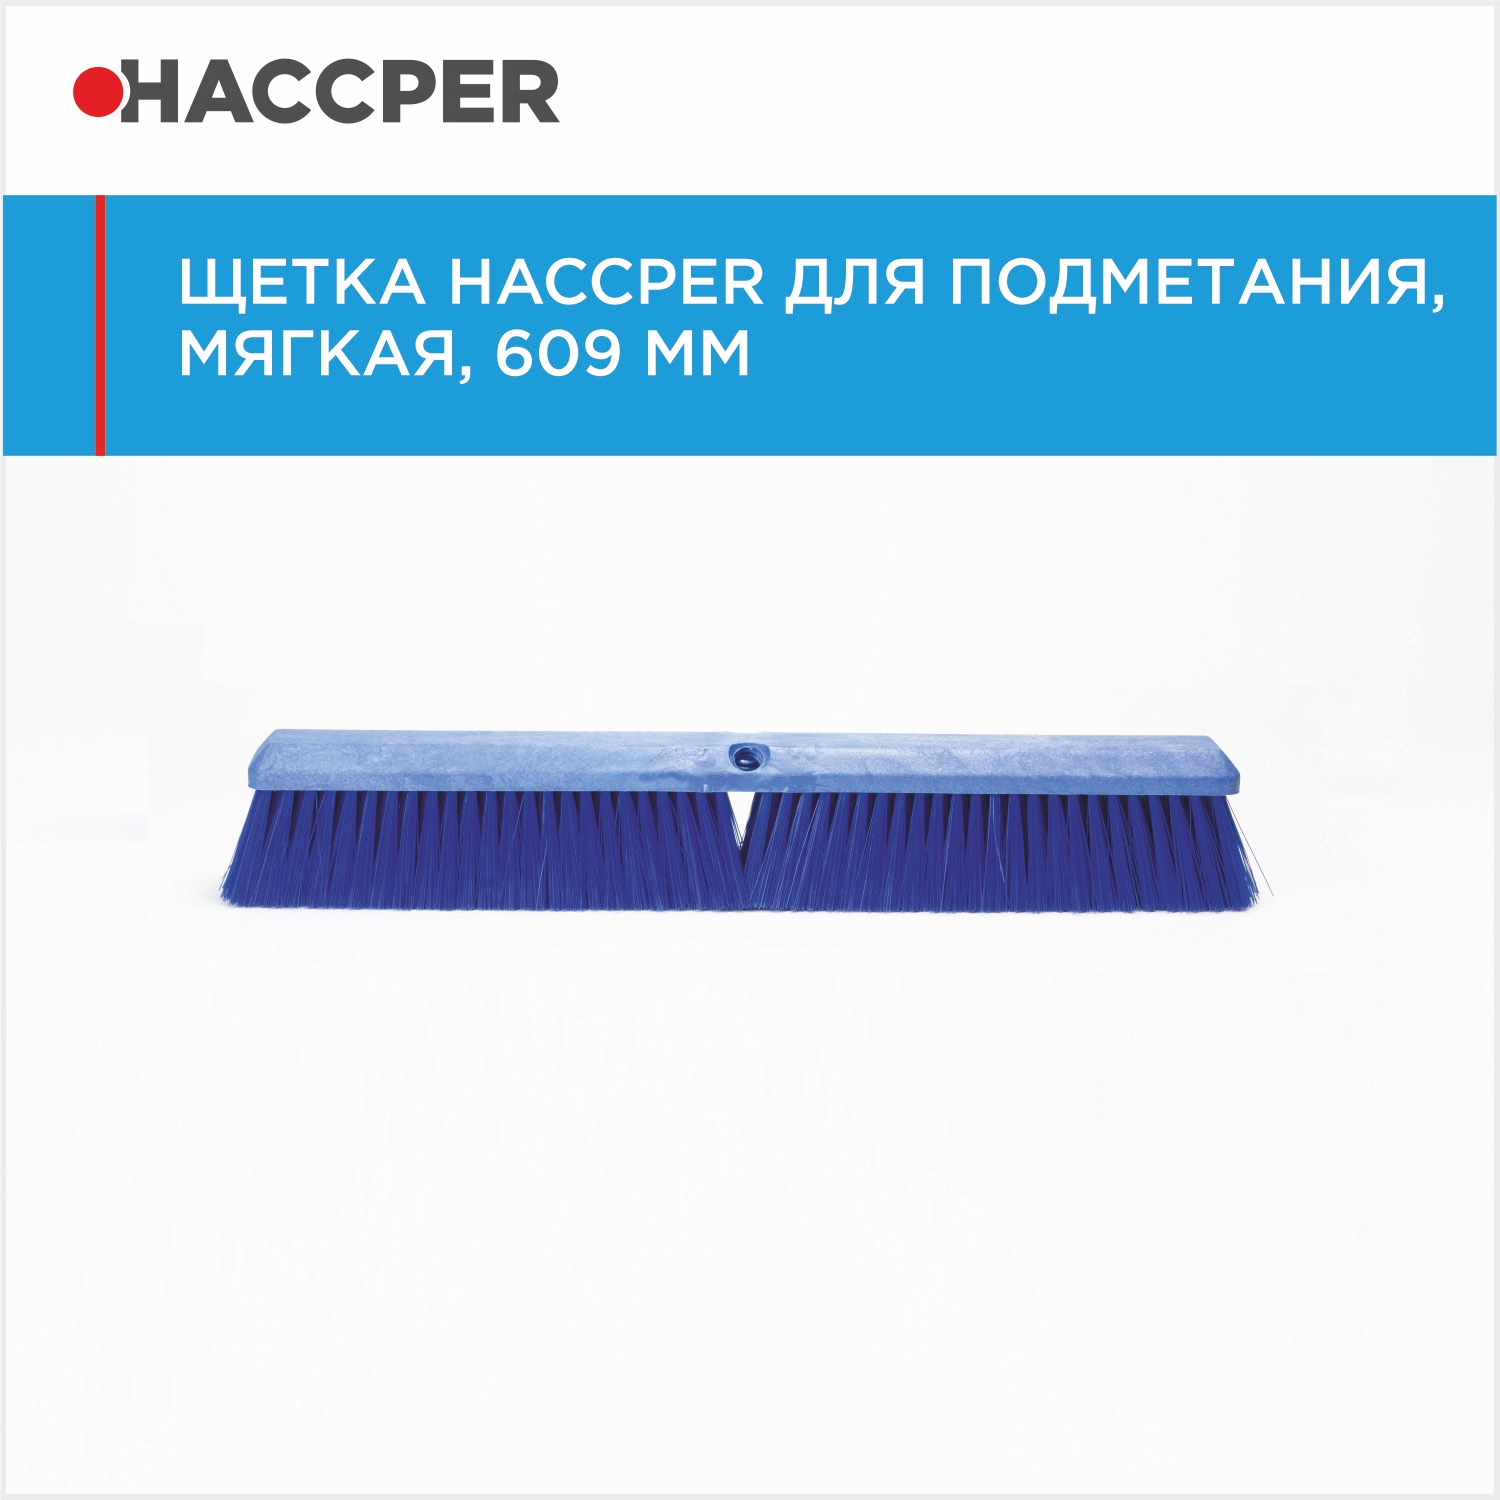 Щетка HACCPER для подметания, мягкая, 609 мм, синяя